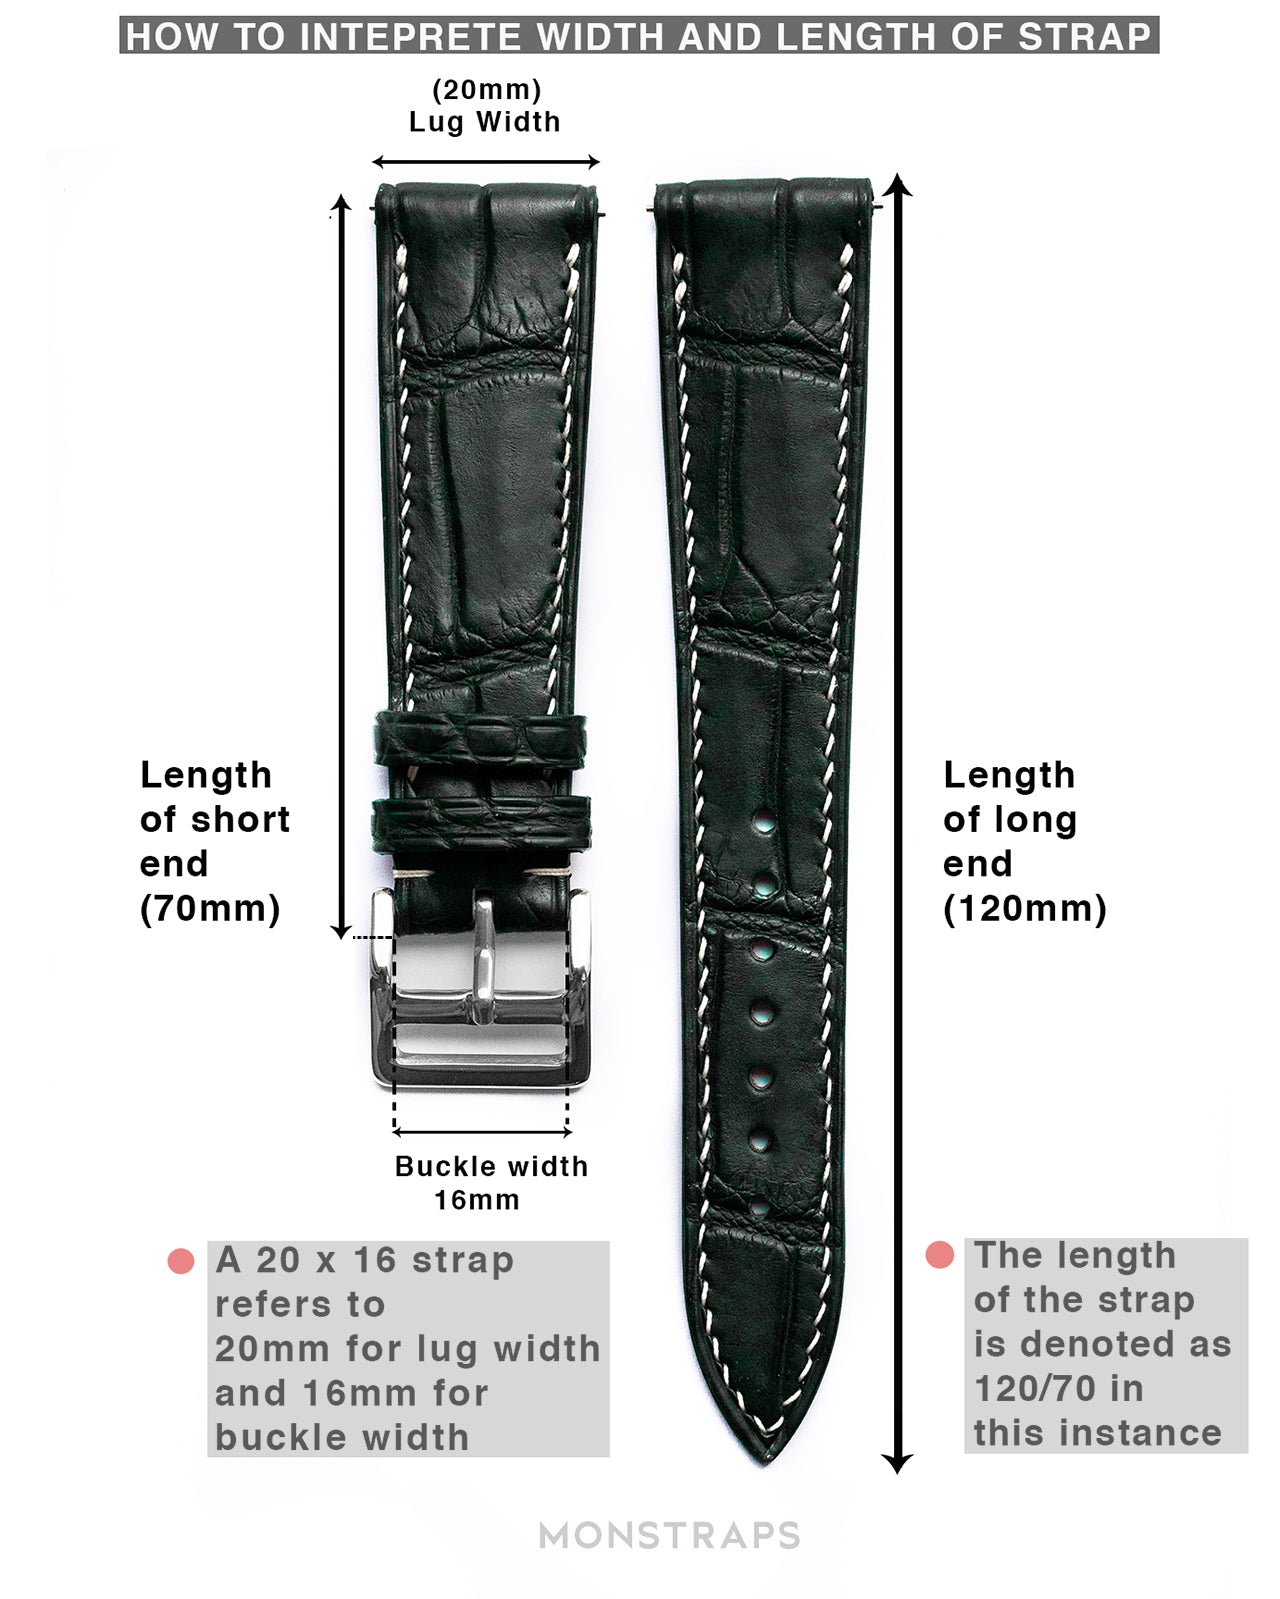 Buy 26mm/24mm GREEN Genuine Alligator Leather Skin Watch Strap